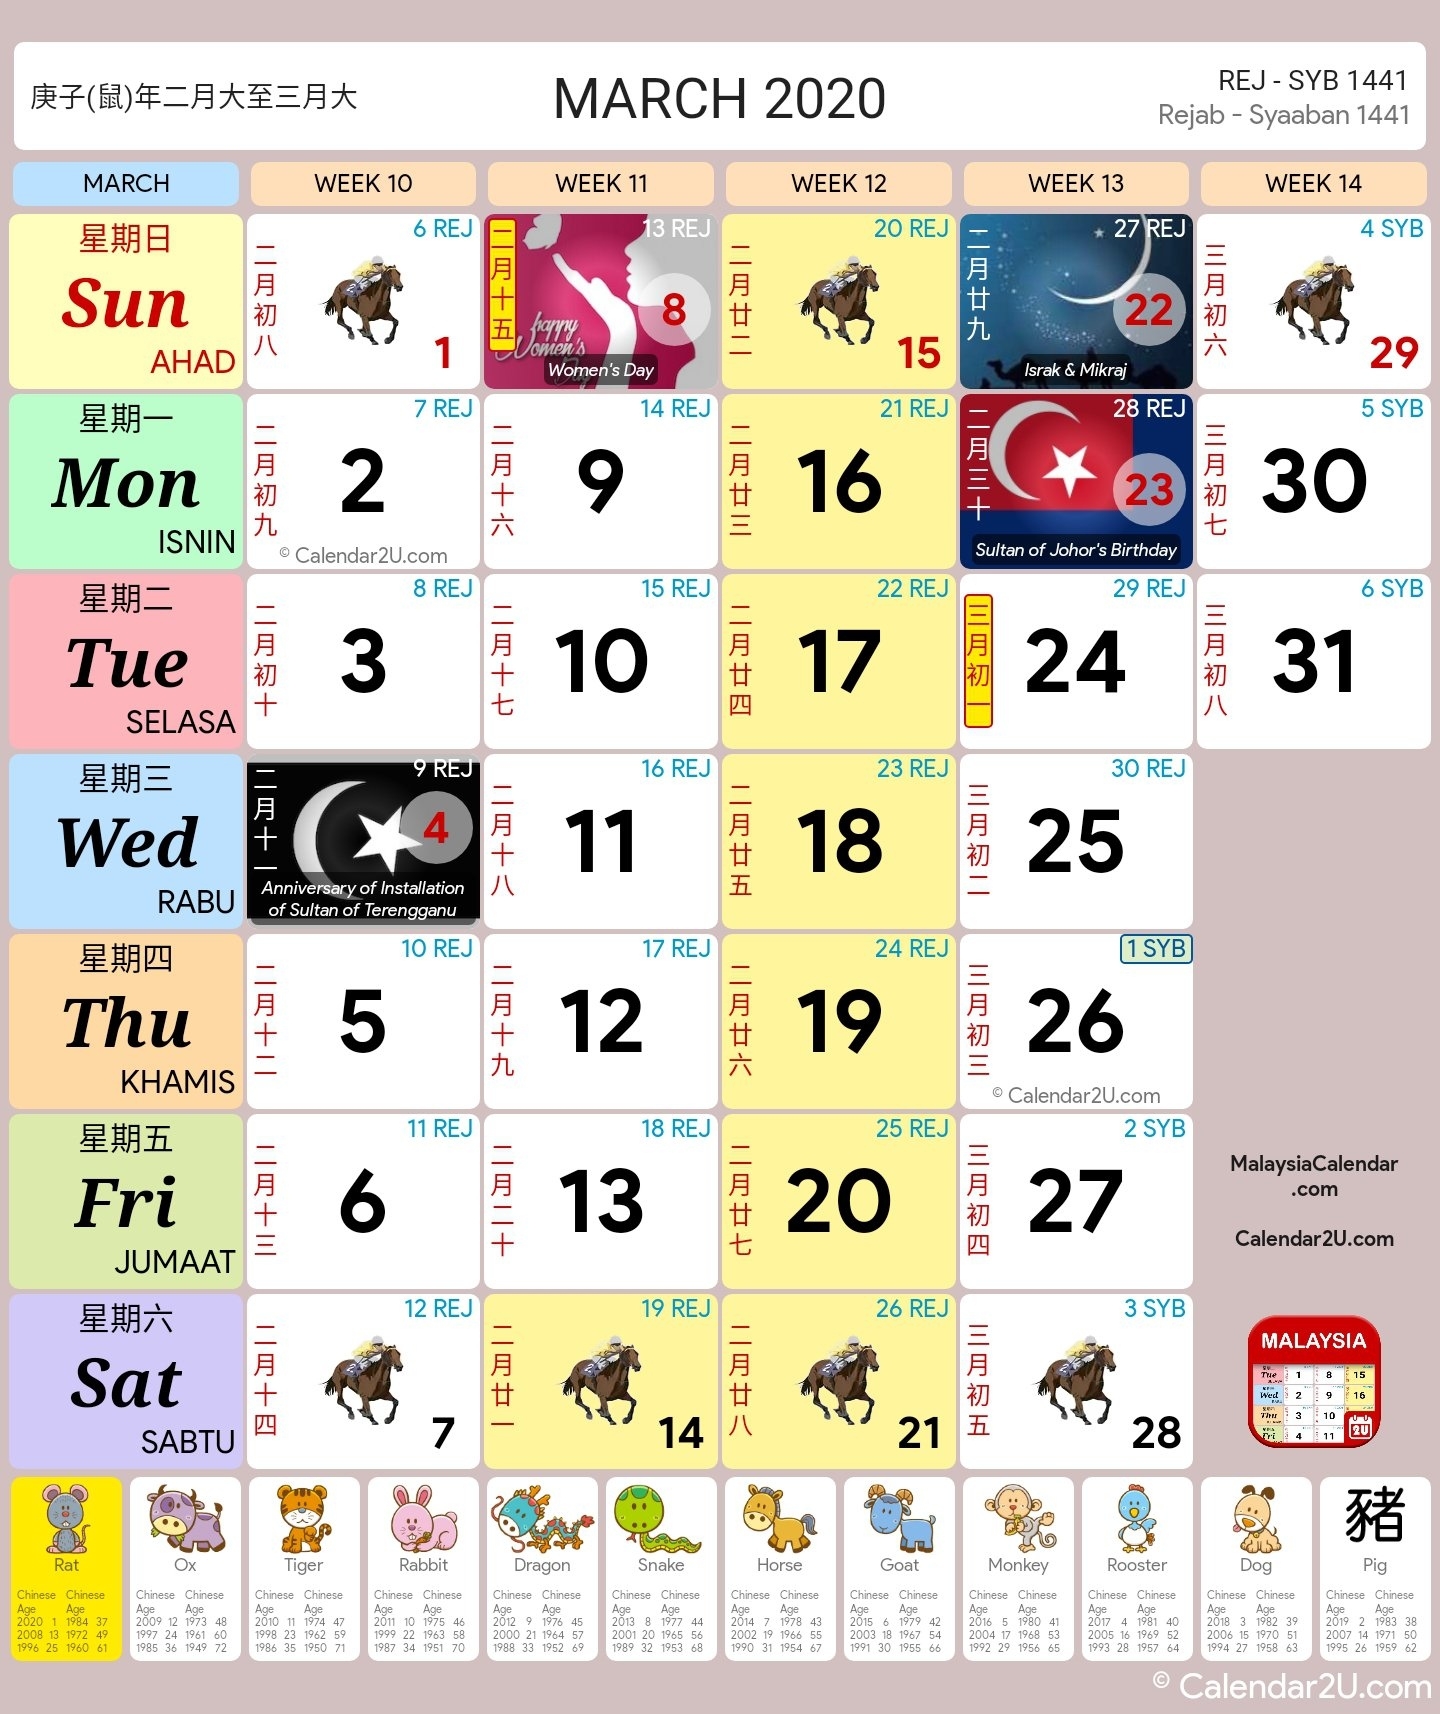 Malaysia Calendar Year 2020 (School Holiday) - Malaysia Calendar 2020 School Holiday Calendar Malaysia